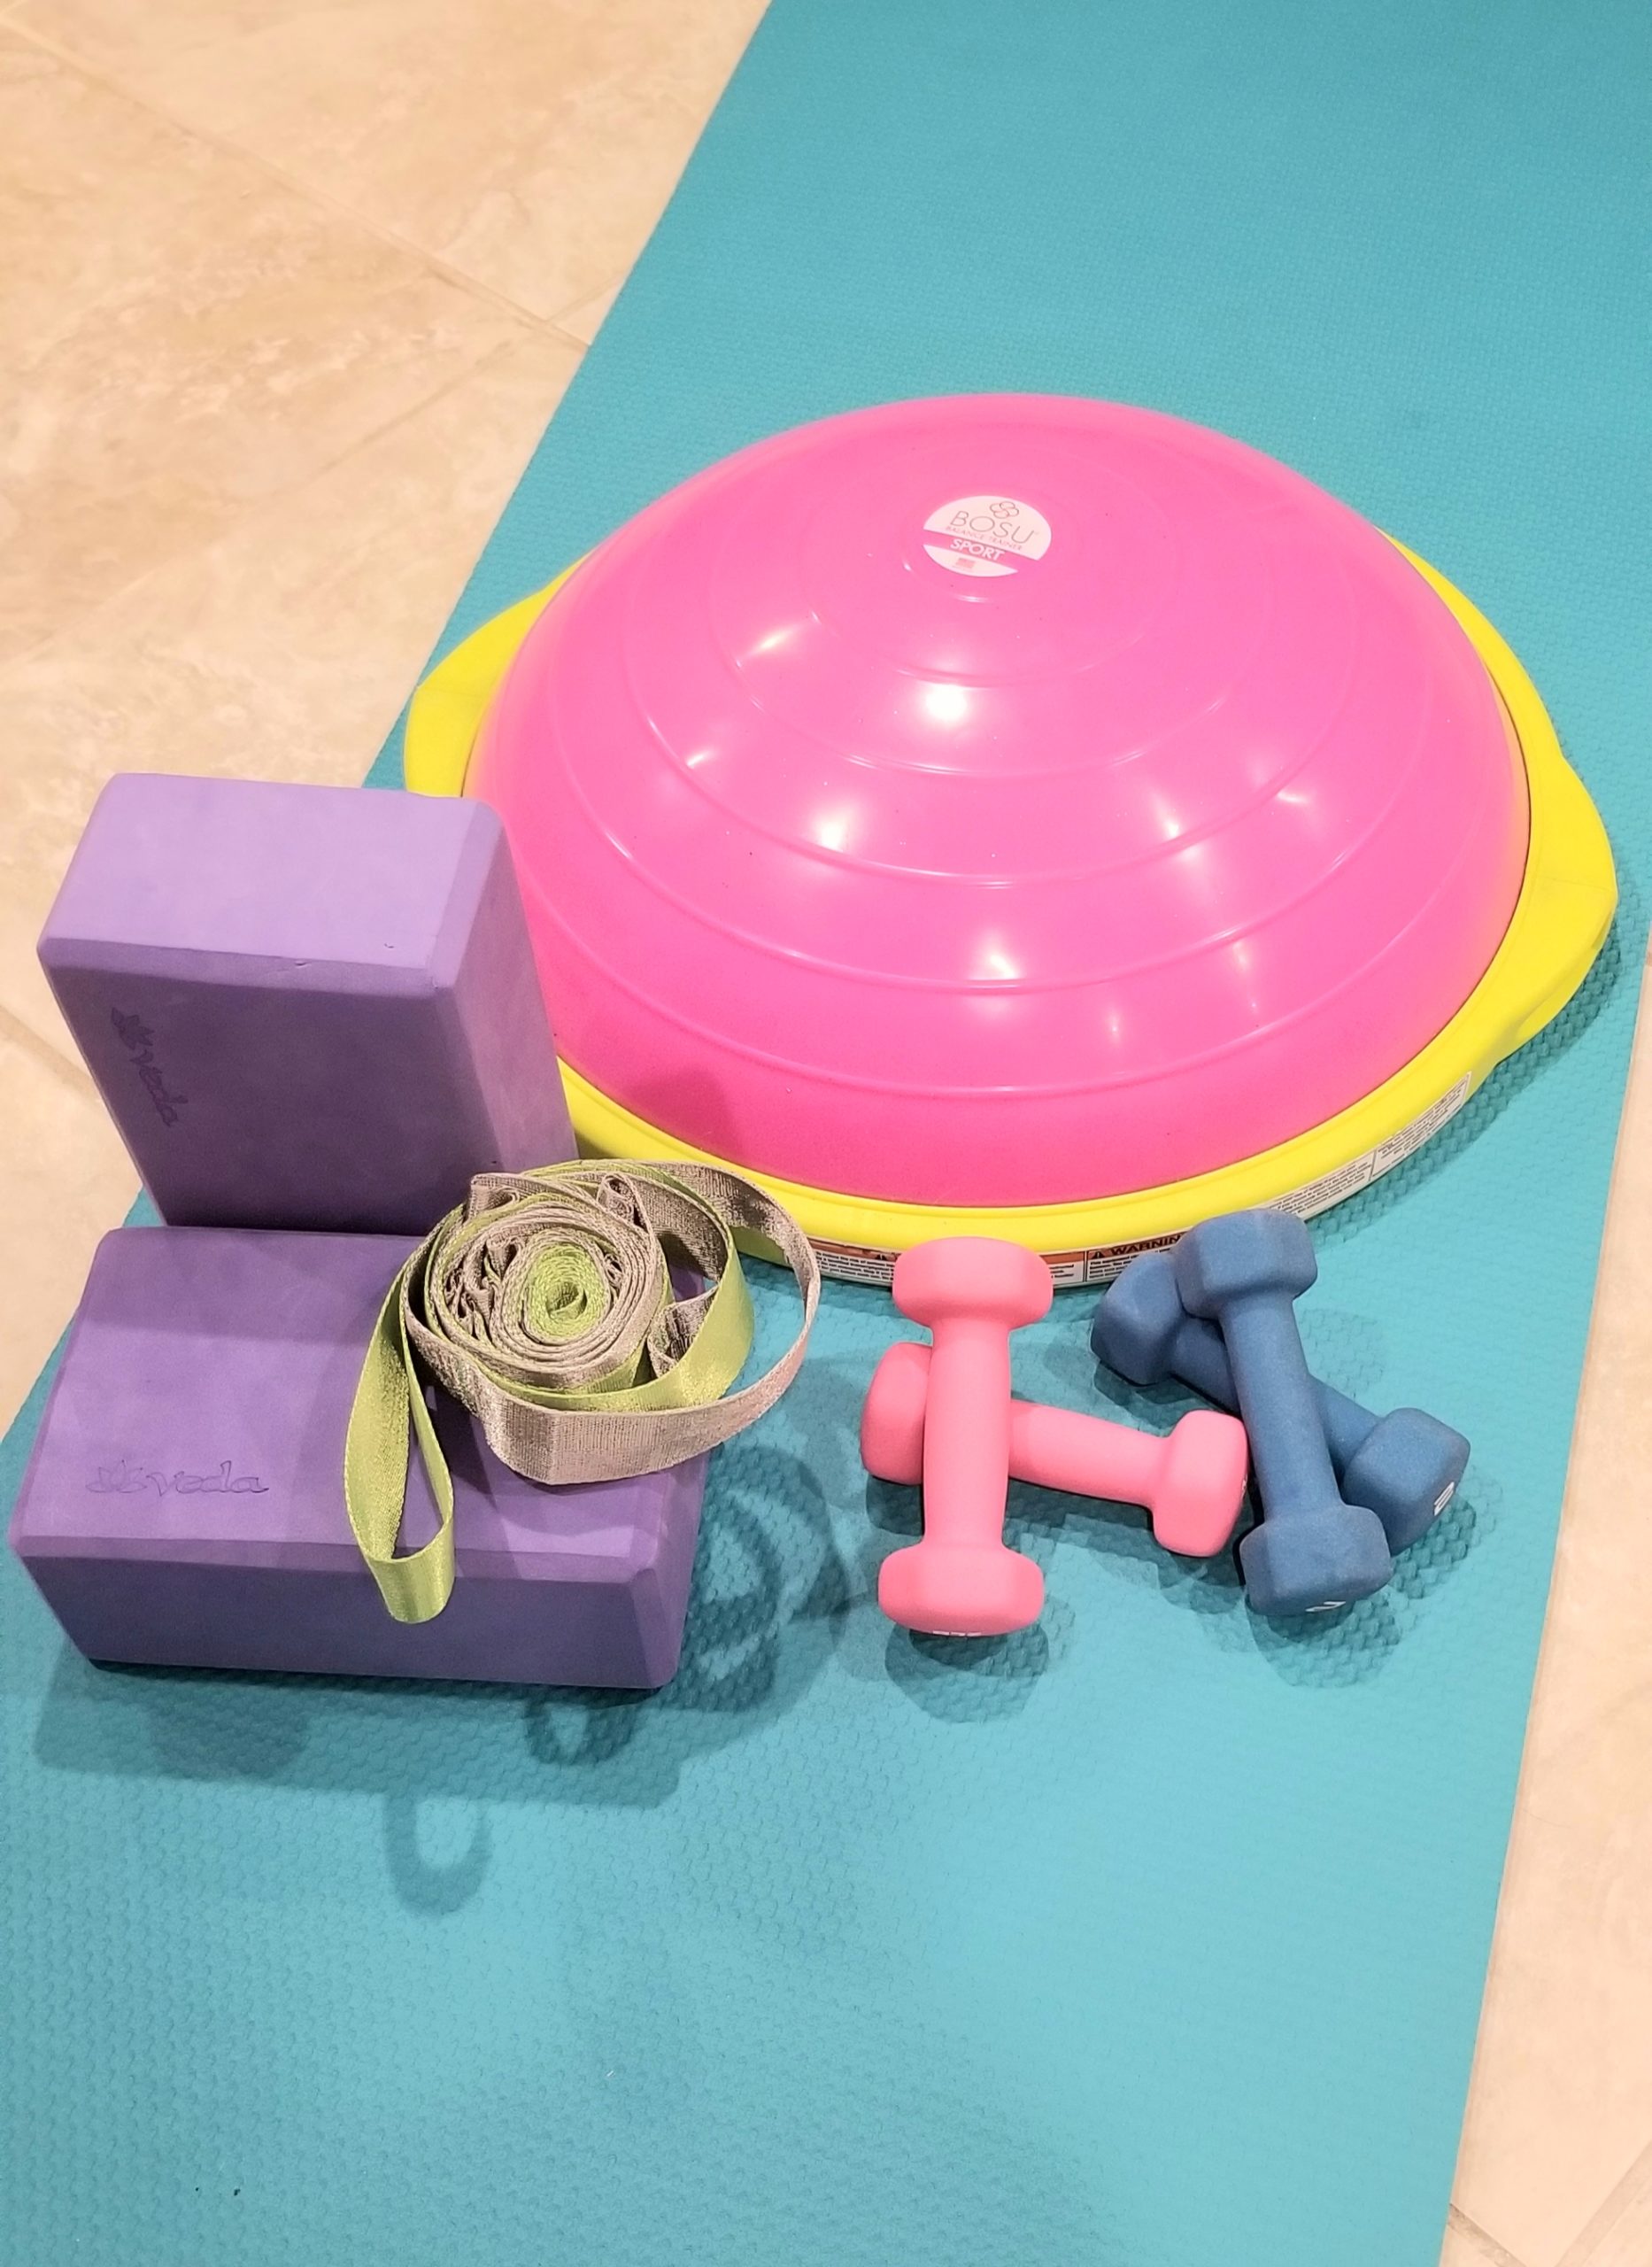 Equipment (Bosu, weights, yoga strap, yoga blocks, yoga mat)